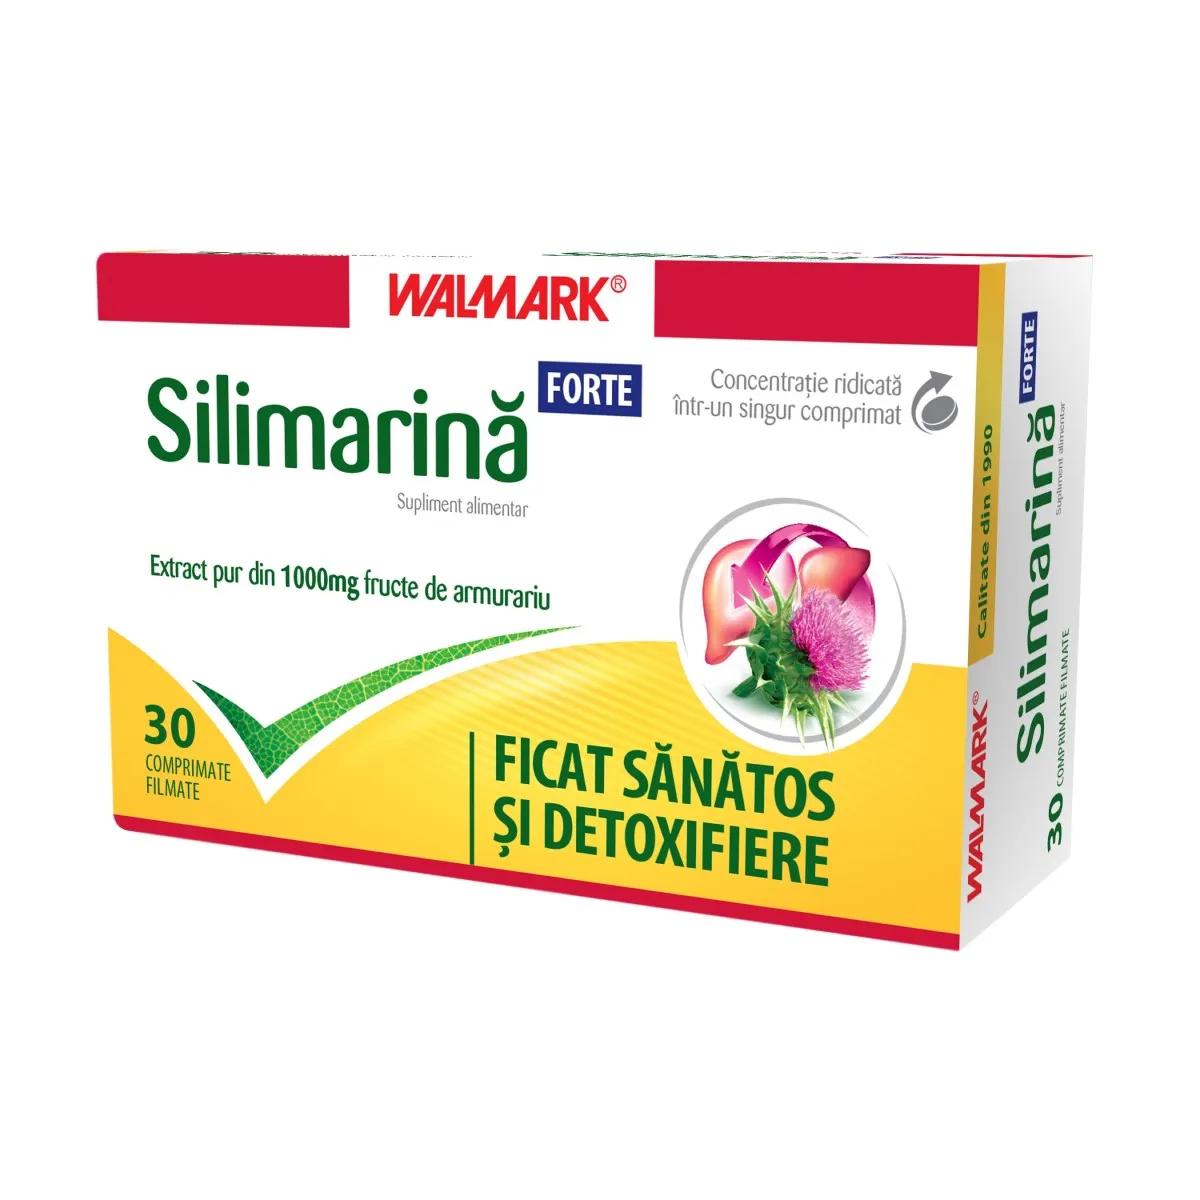 Silimarina Forte, 30 comprimate, Walmark